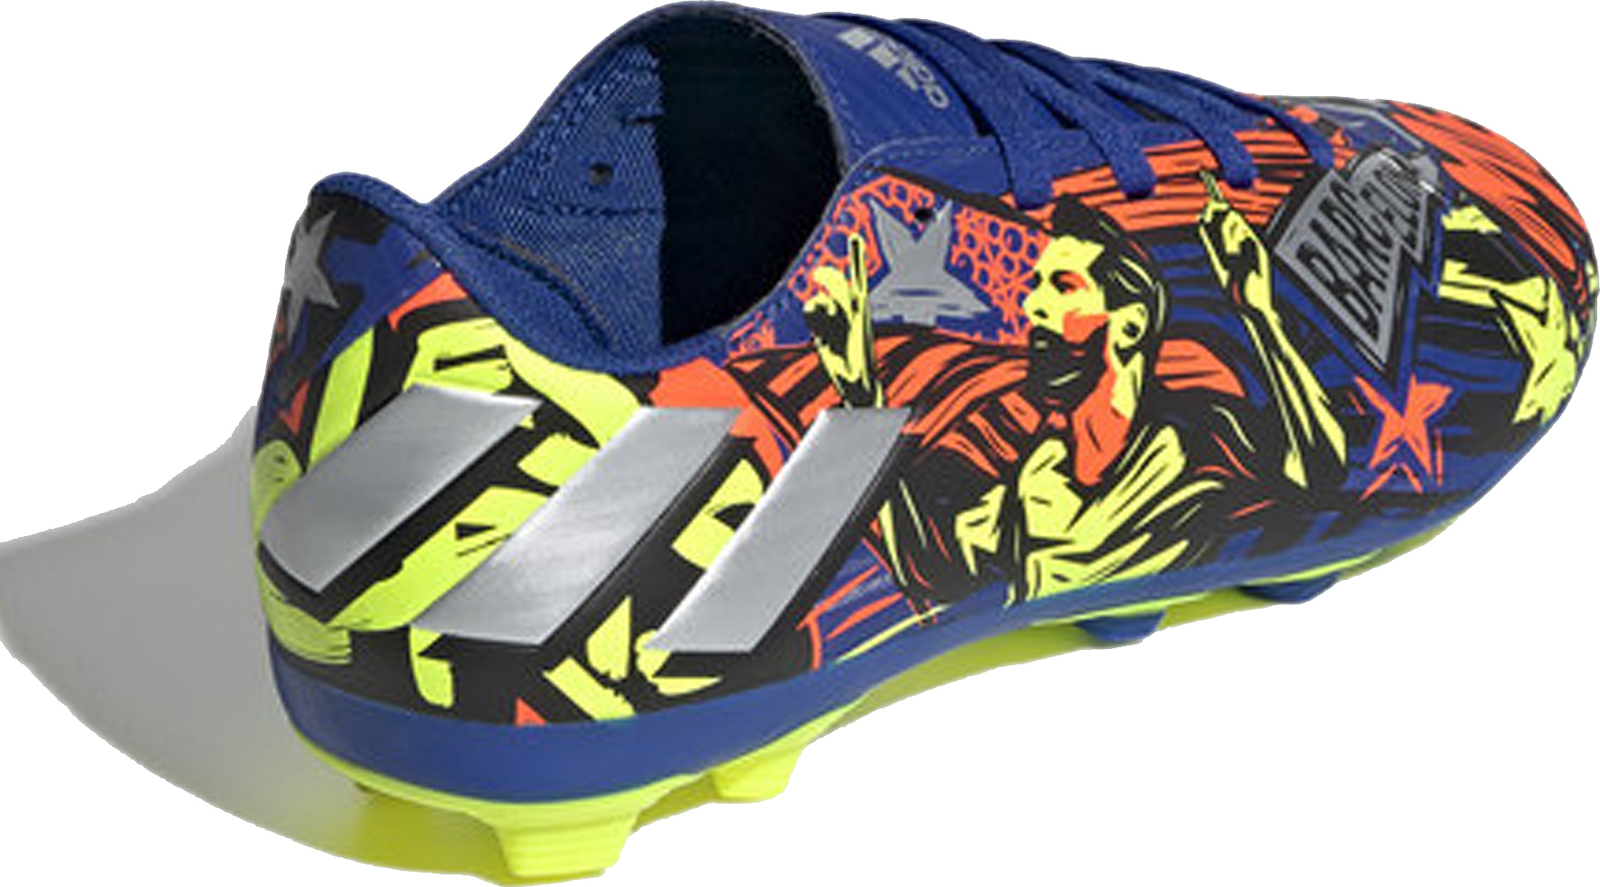 Adidas Παιδικά Ποδοσφαιρικά Παπούτσια Nemeziz Messi 19.4 με Τάπες Πολύχρωμα